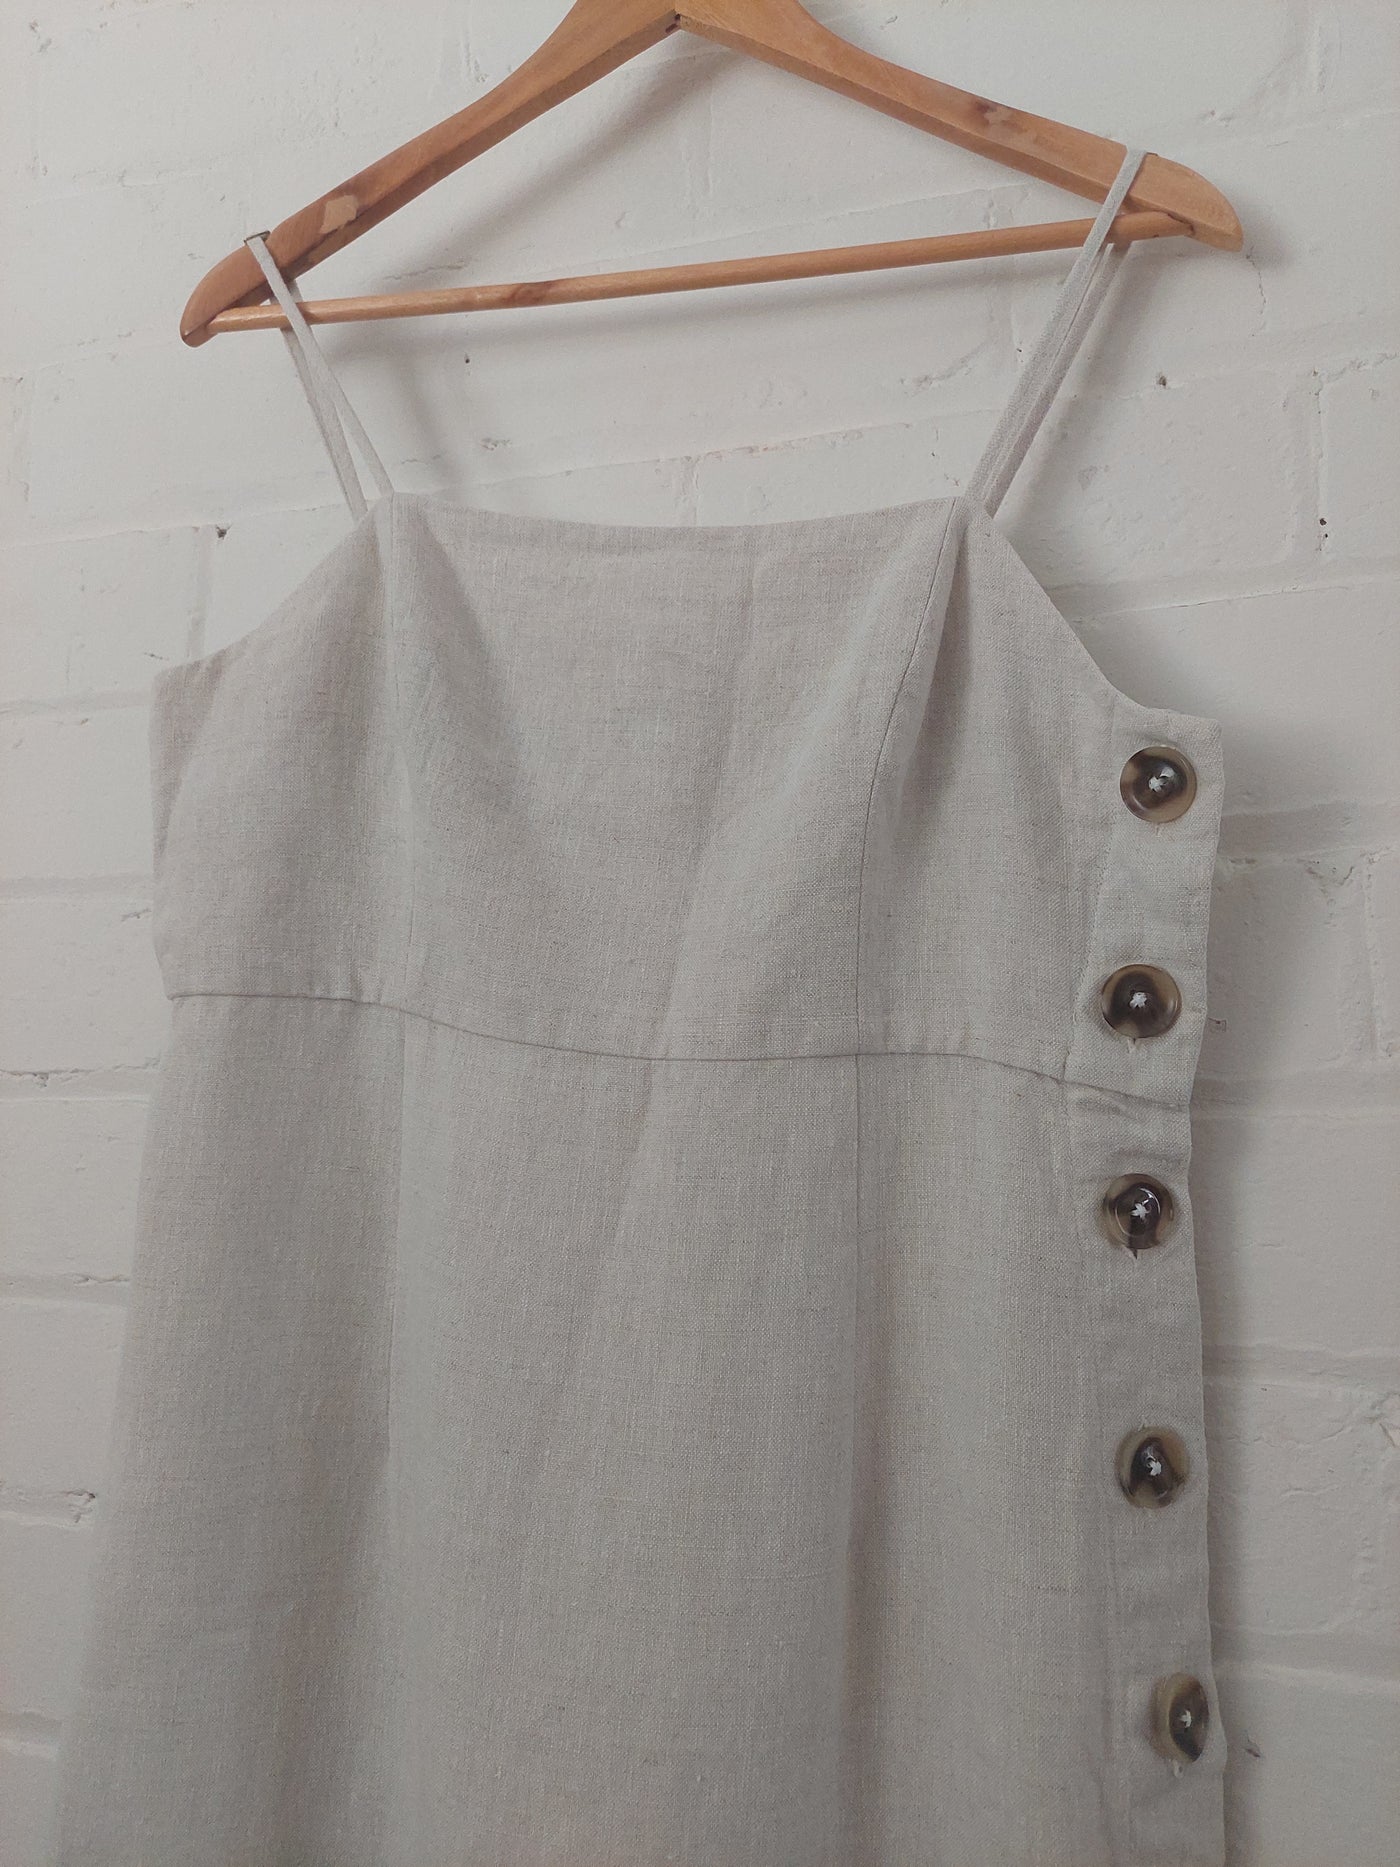 Shona Joy 'Aluaro' Fitted Midi Dress in Natural Linen, Size 12